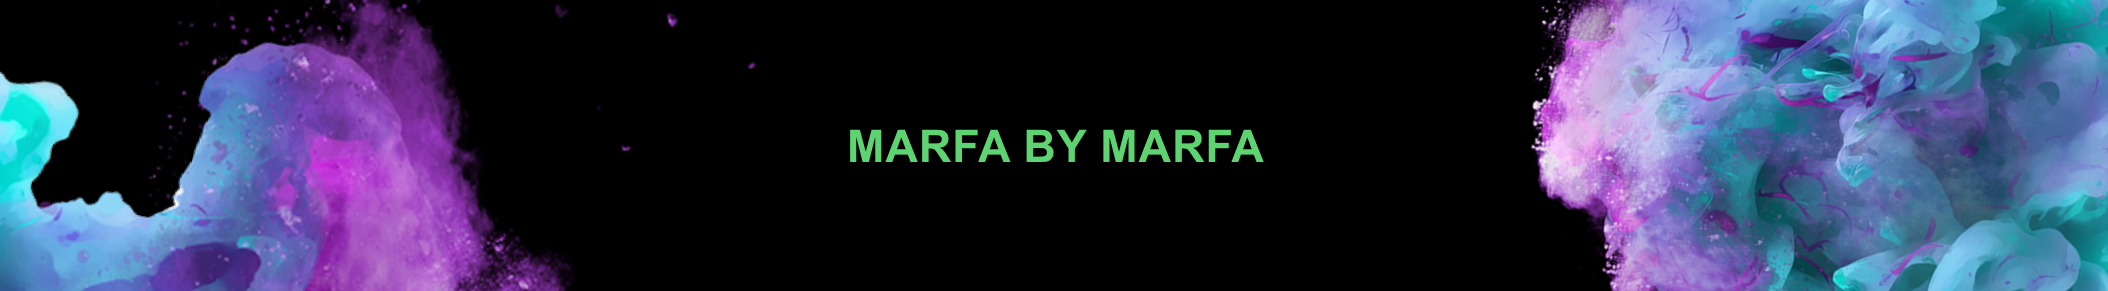 Marfa by Marfa's profile banner